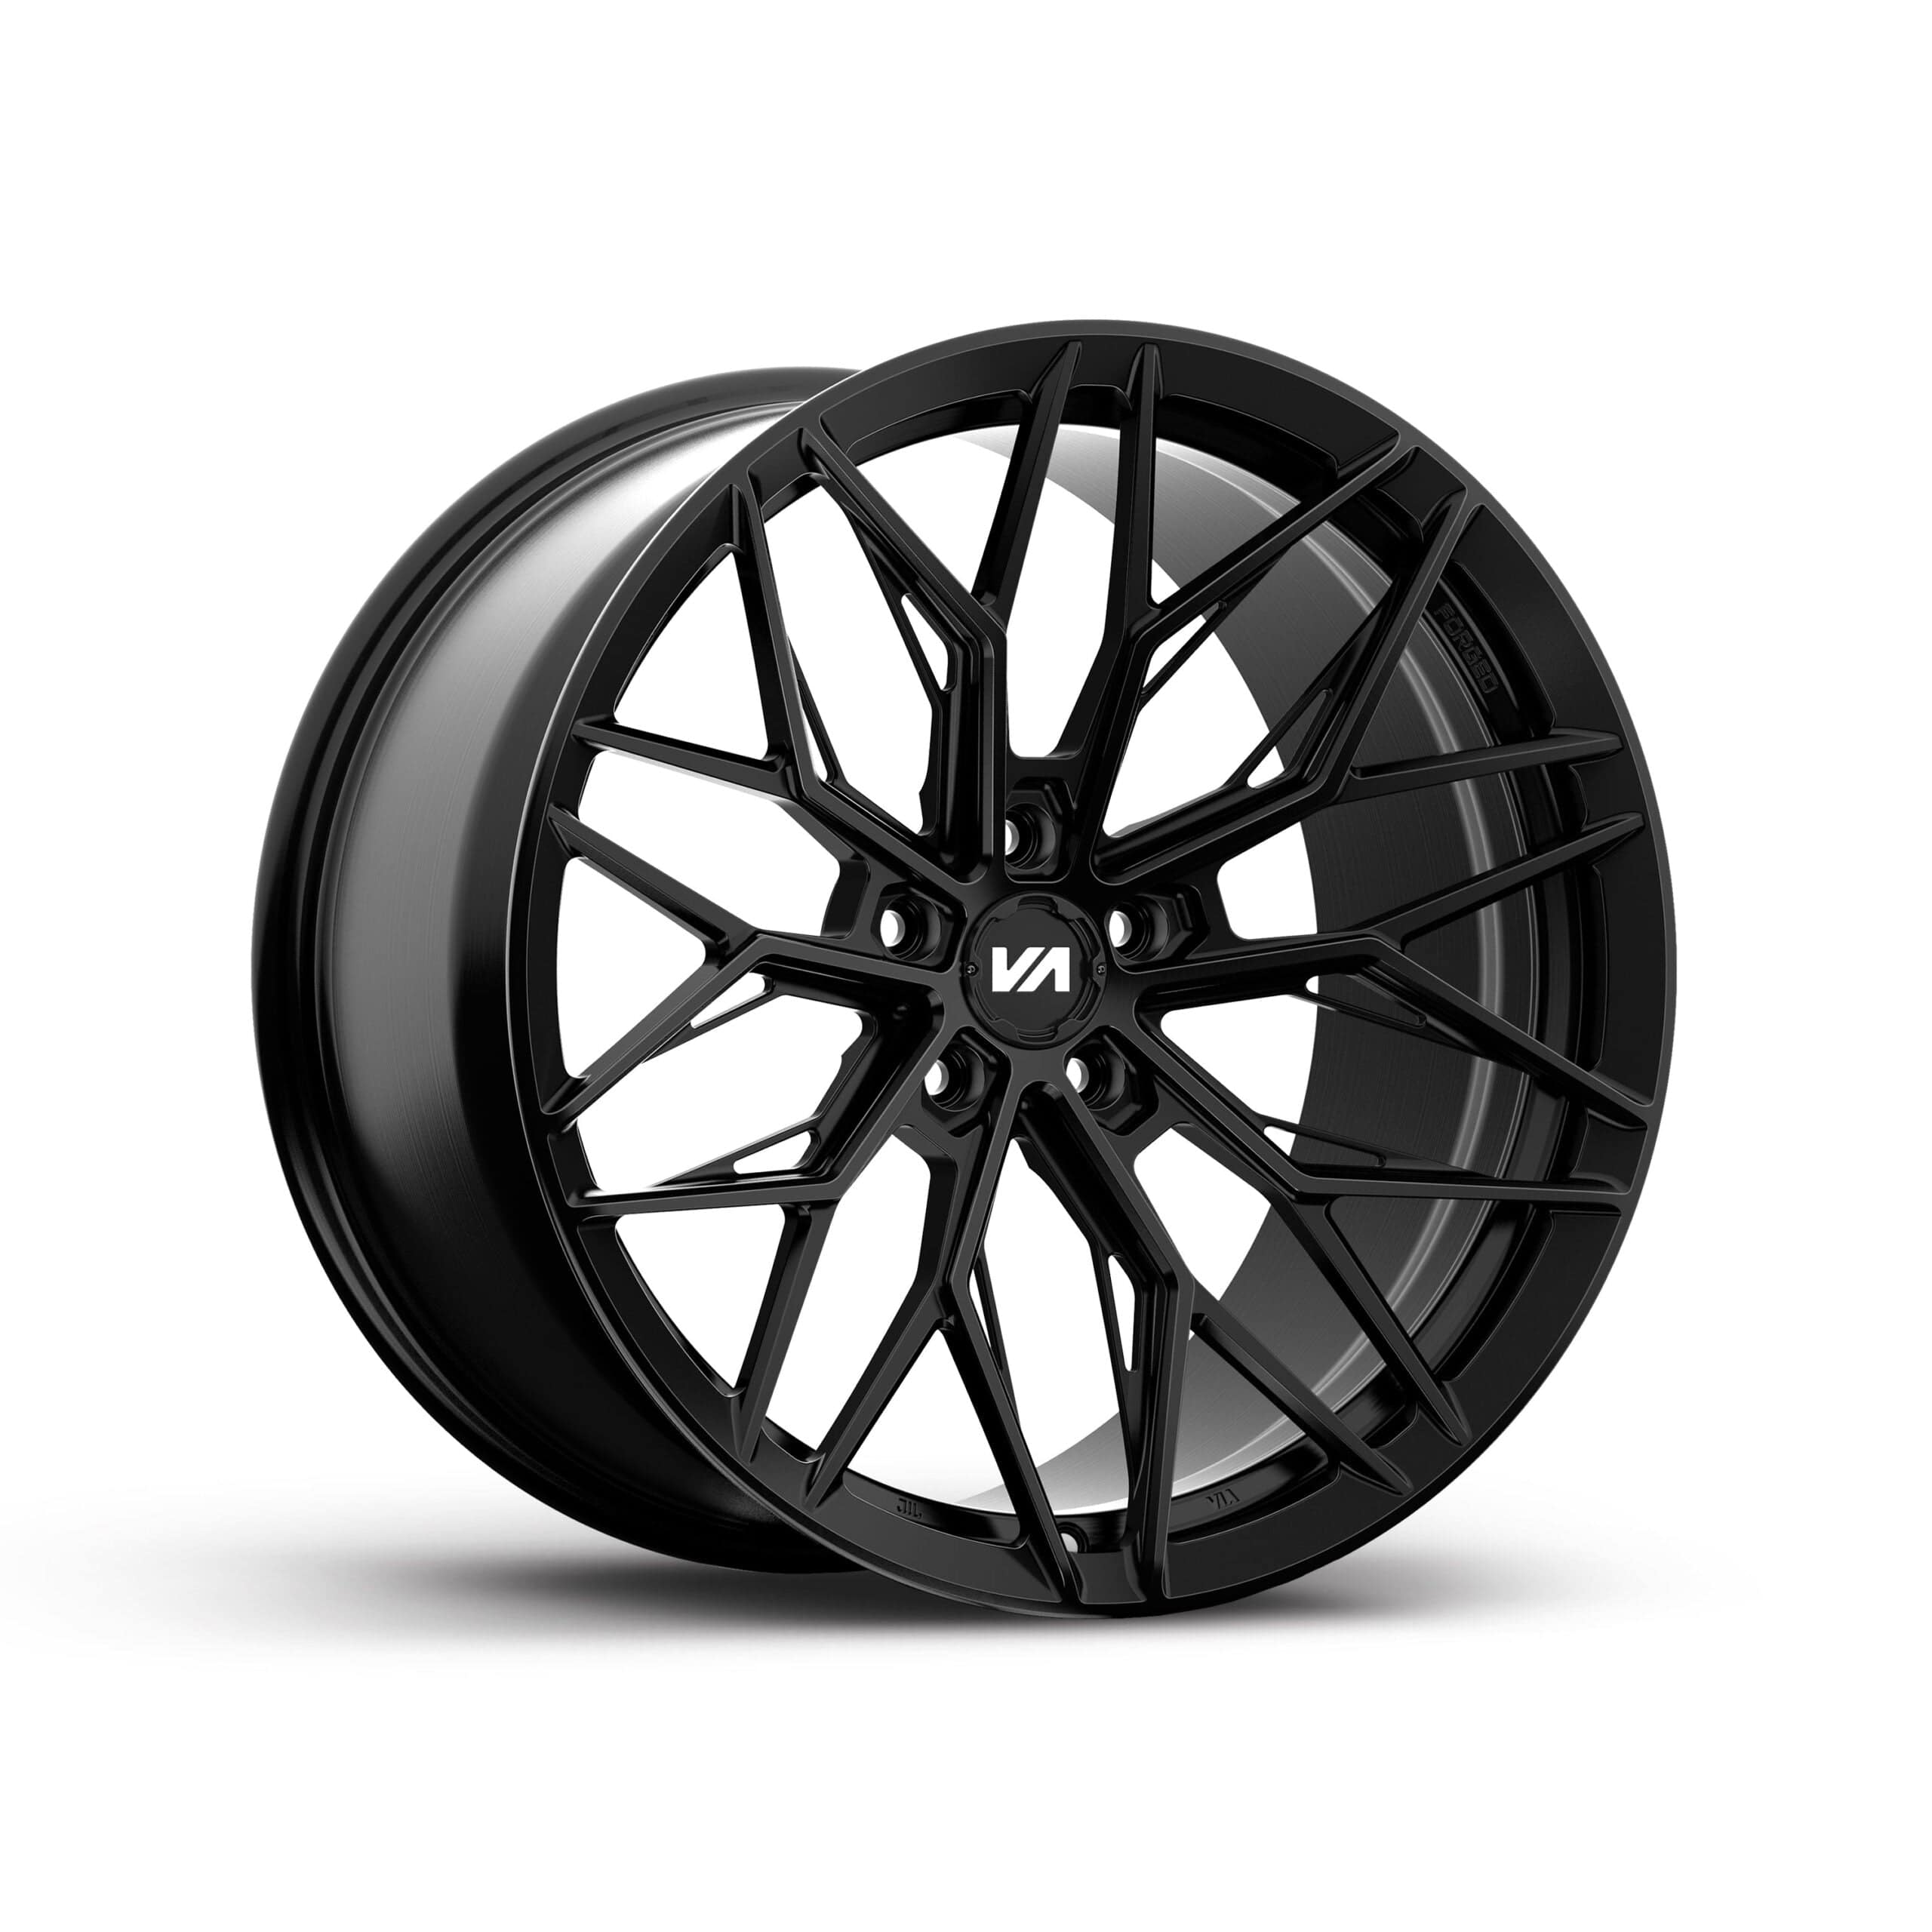 Kies-Motorsports Variant Variant™ Maxim Collection Alloy Wheels 19x11